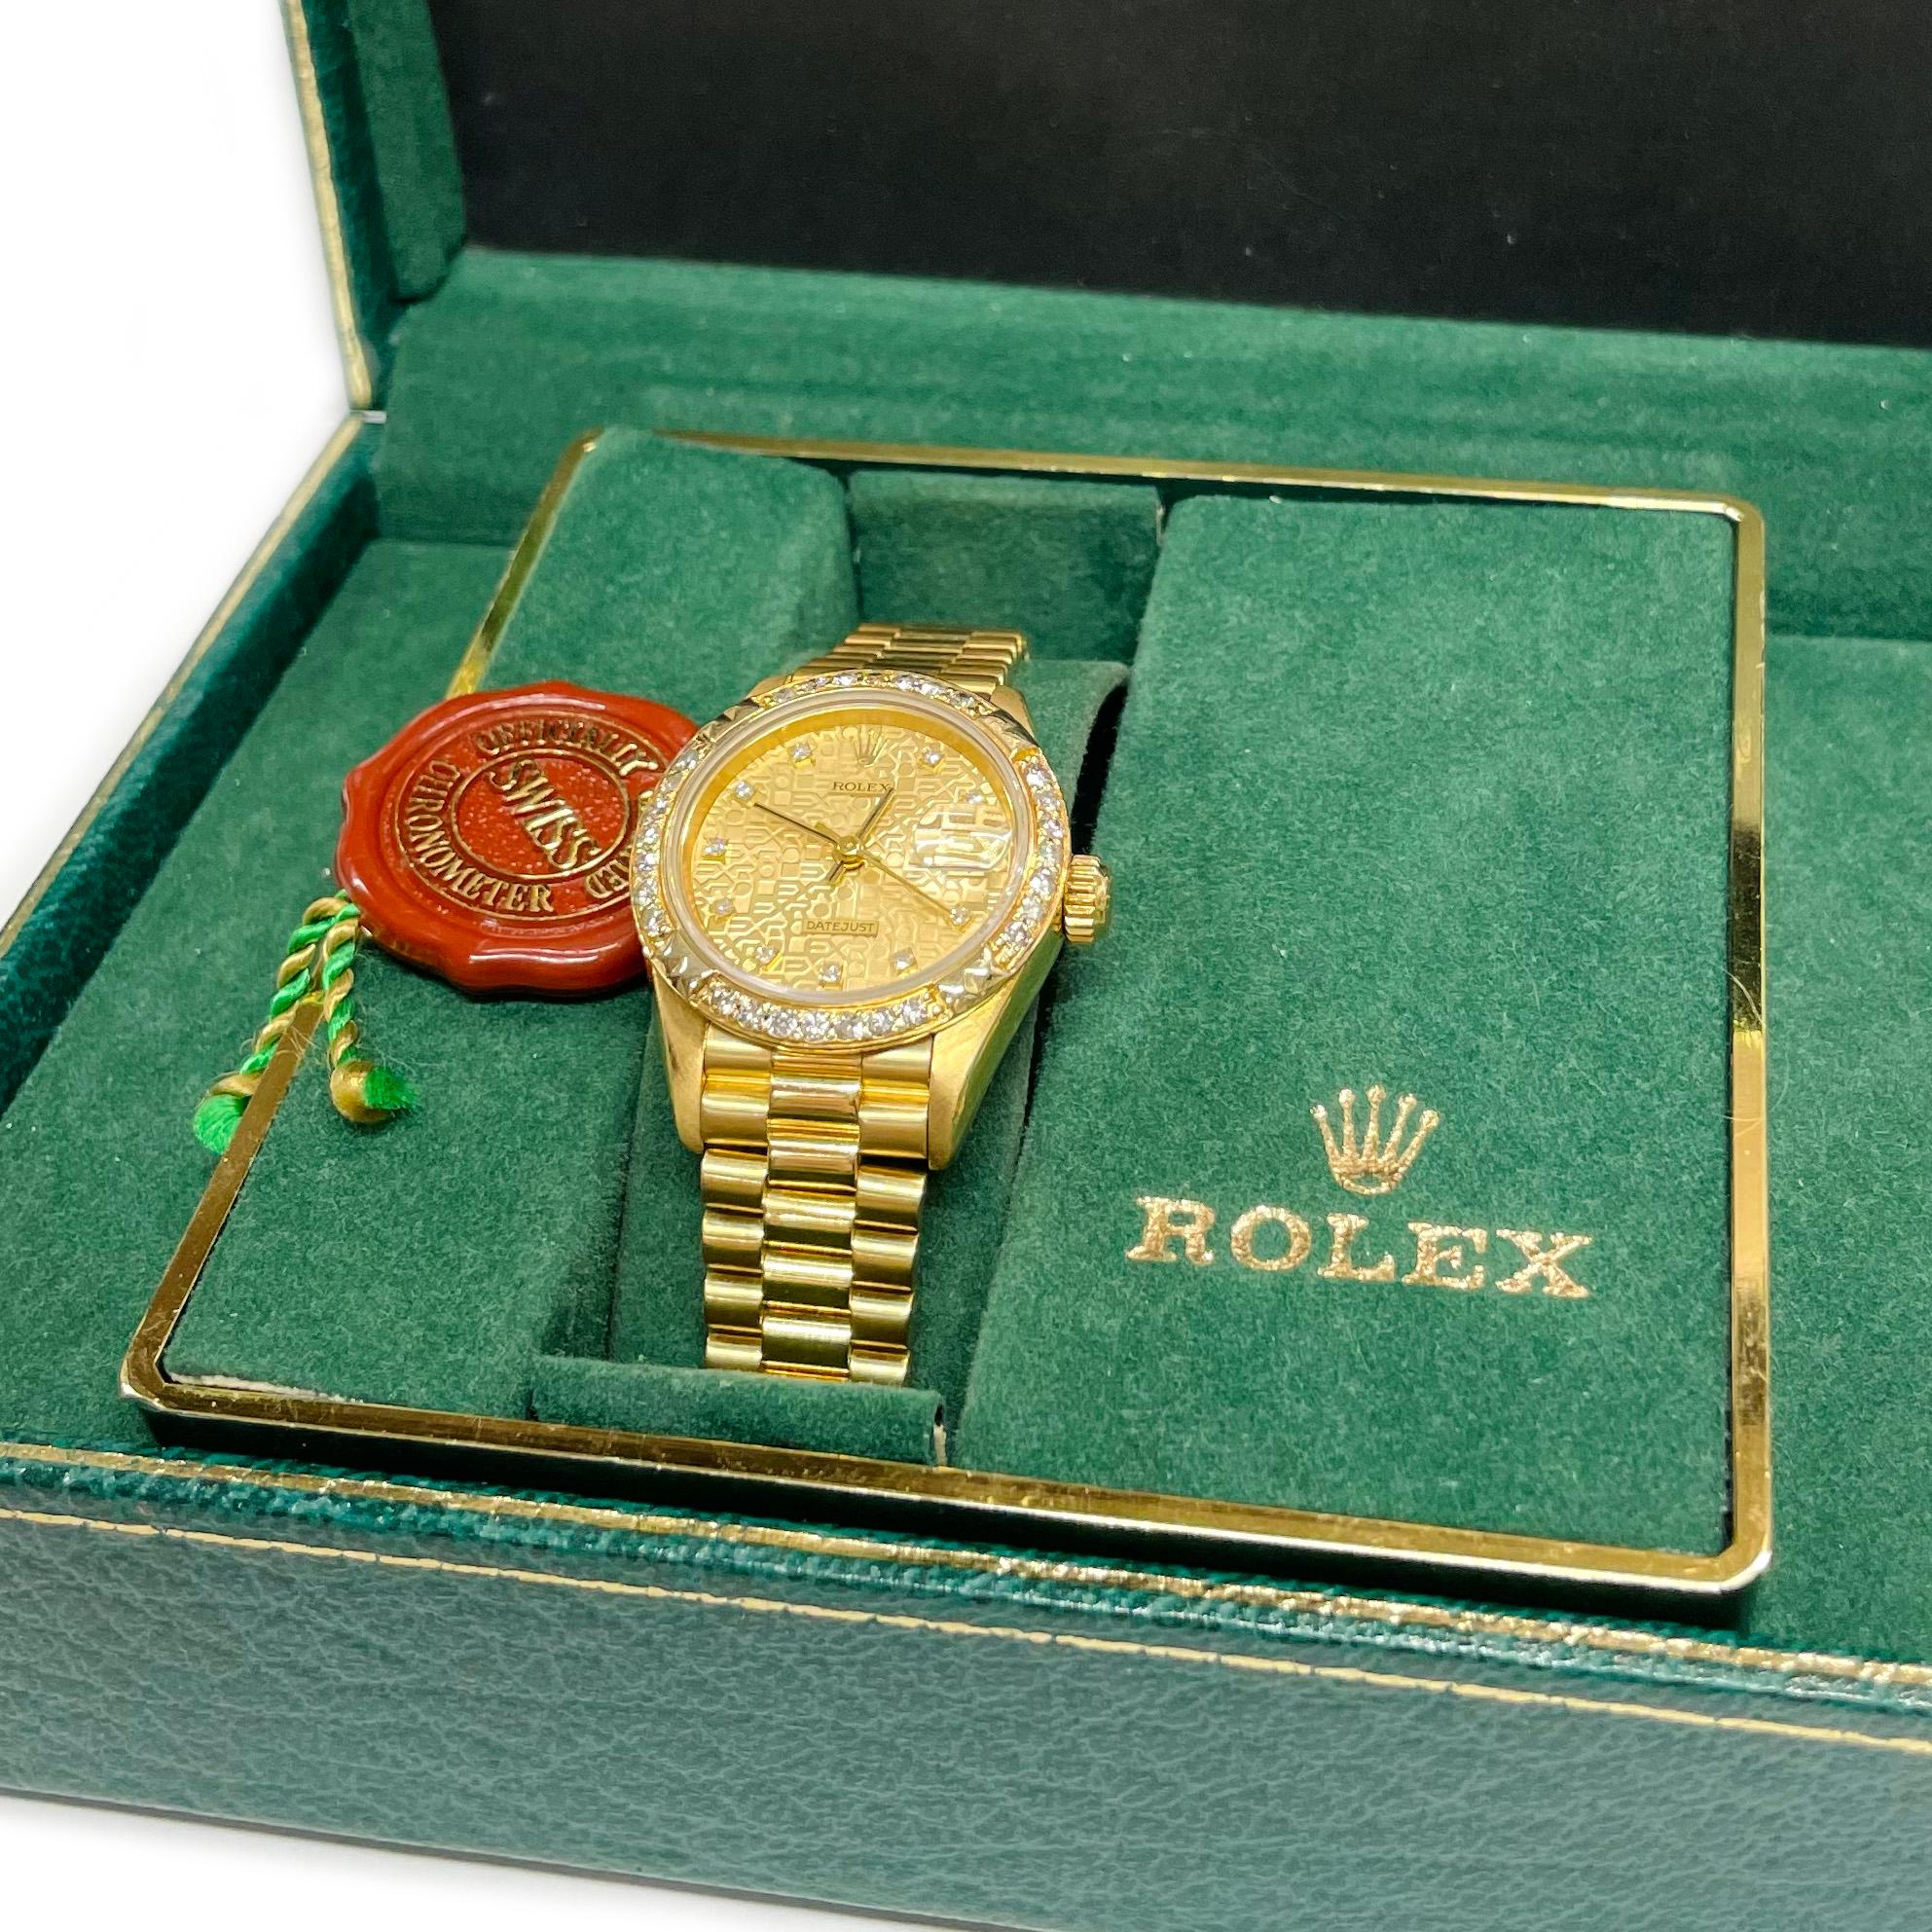 rolex anniversary dial